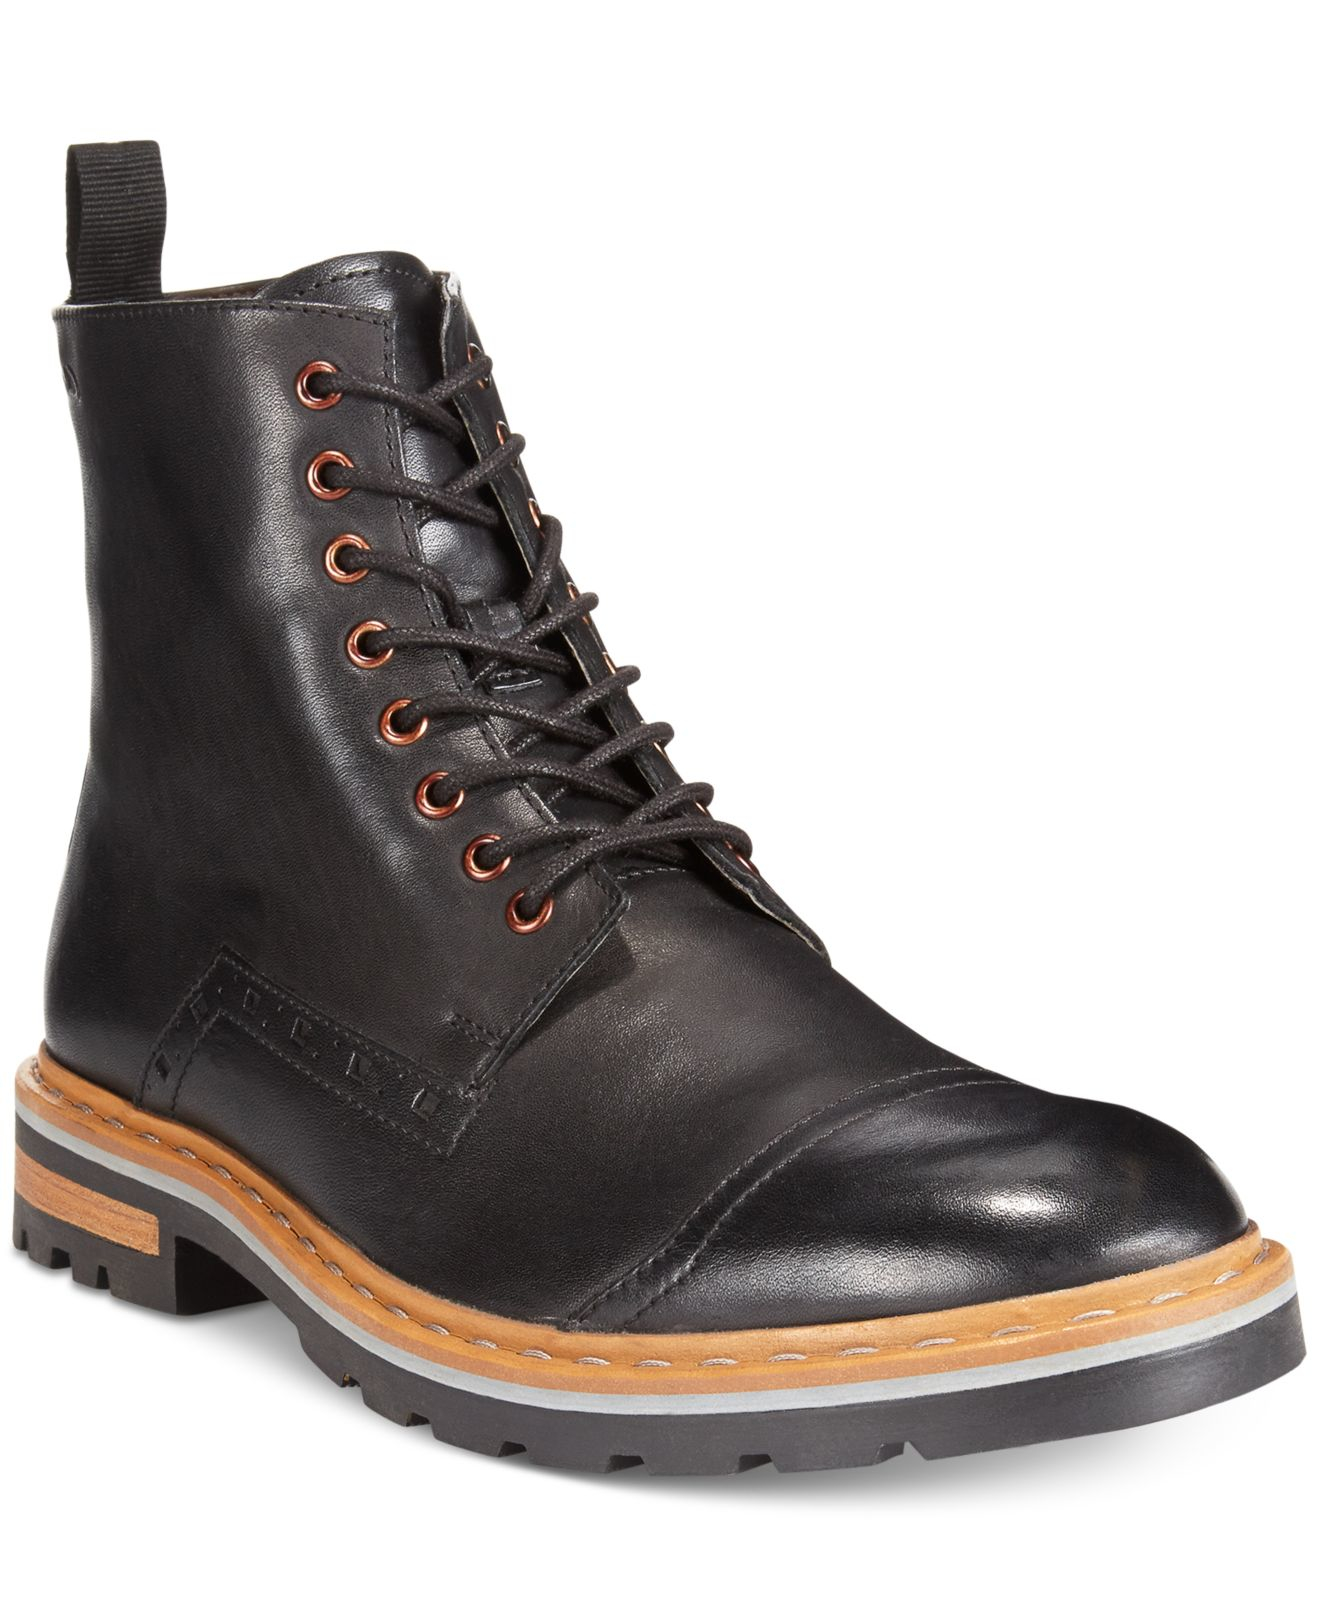 Clark Steel Toe Boots Outlet, 50% OFF | ilikepinga.com